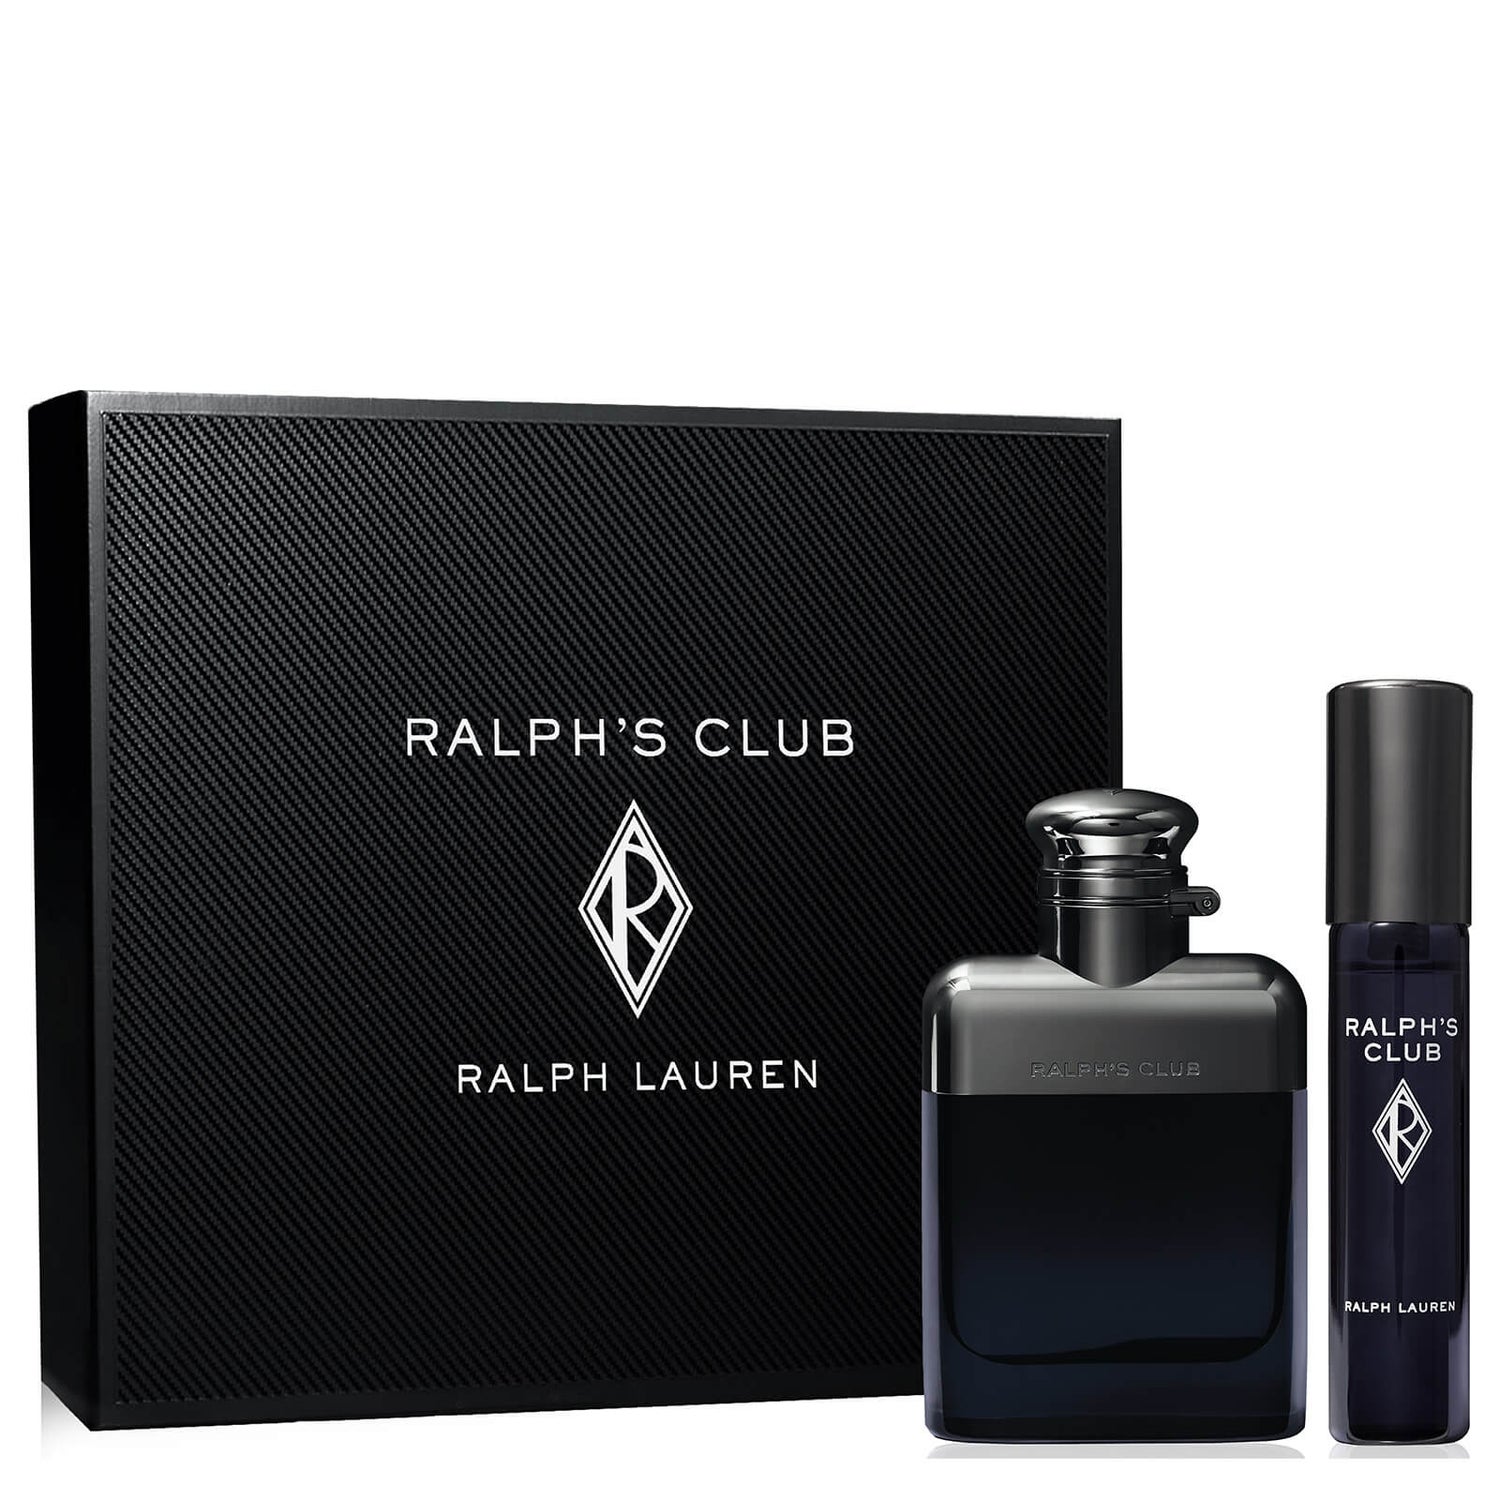 Set cadou Ralph Lauren Ralph's Club Eau de Toilette 50ml (în valoare de £64.00)